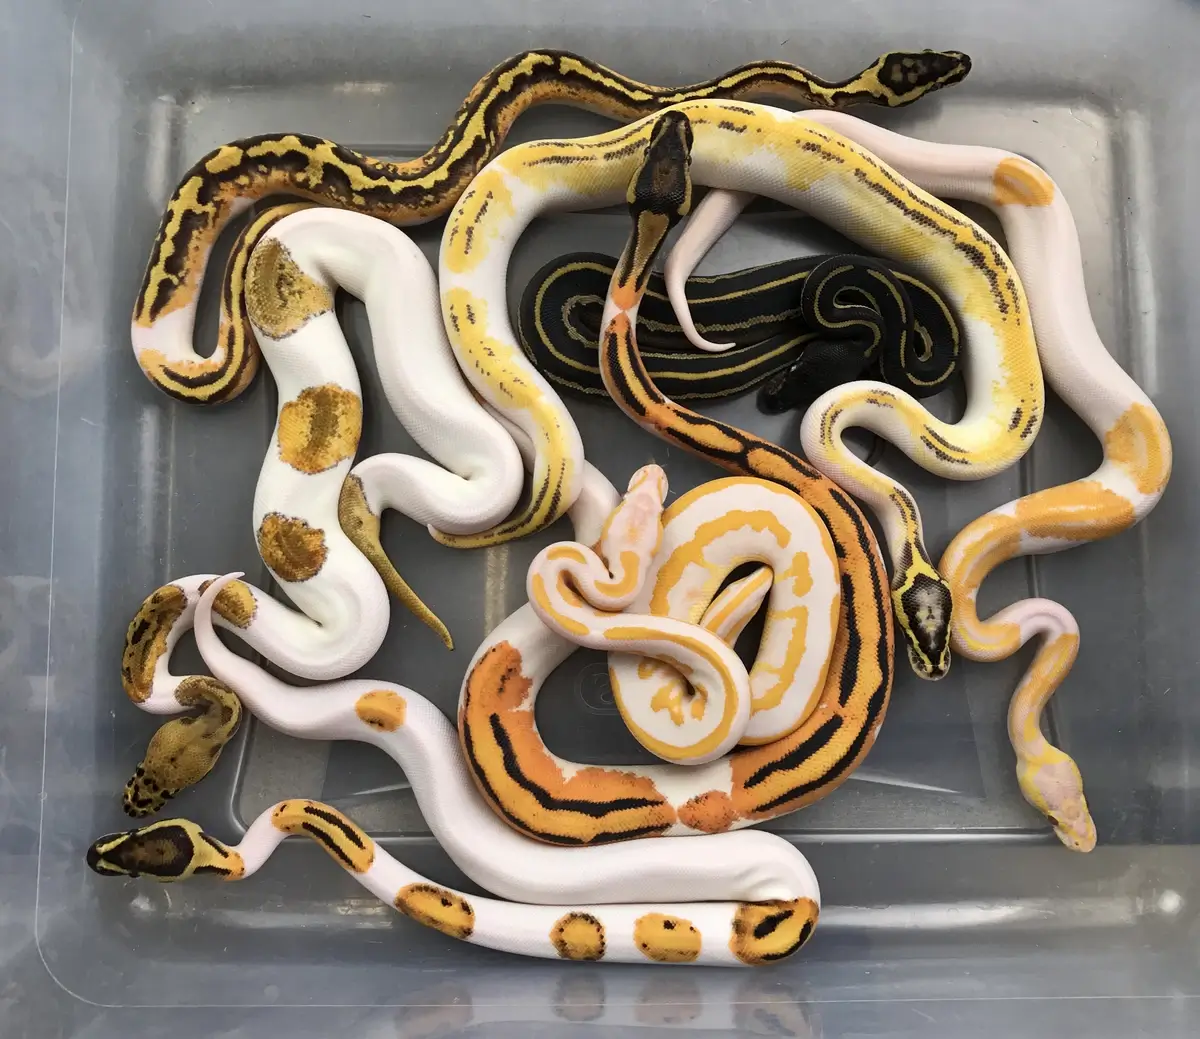 A variety of ball python morphs